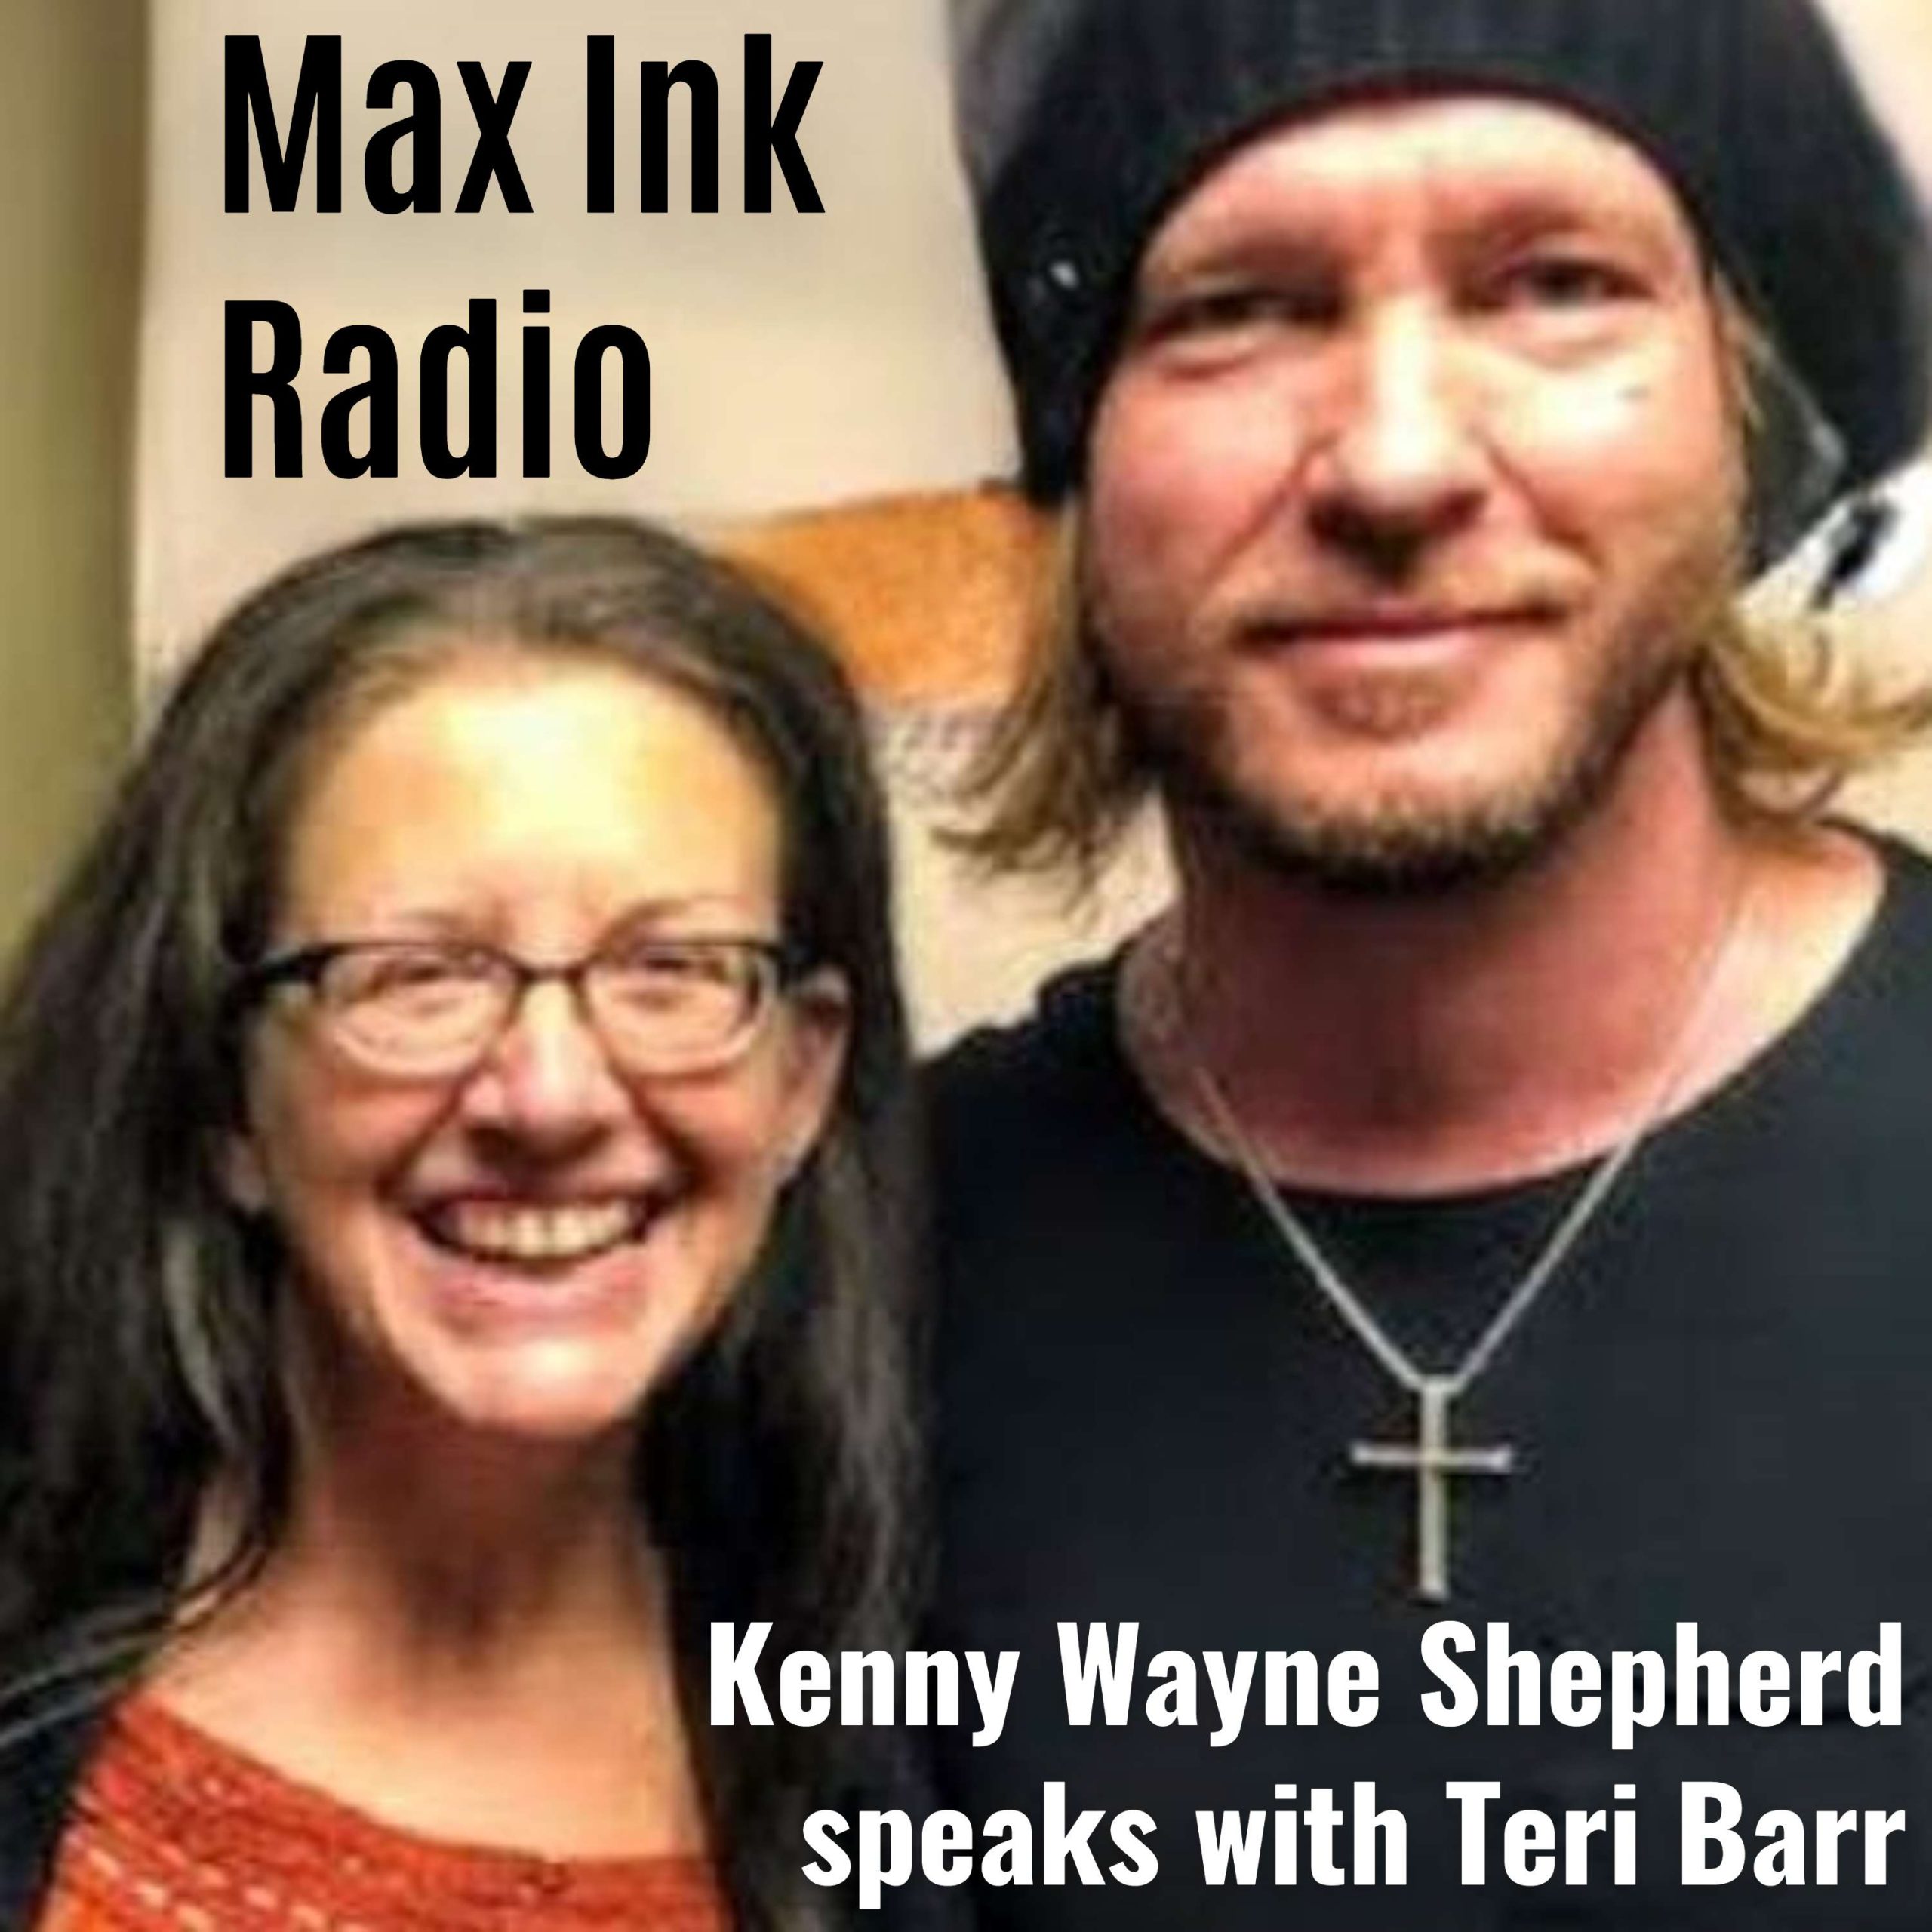 Kenny Wayne Shepherd and Max Ink Radio's Teri Barr